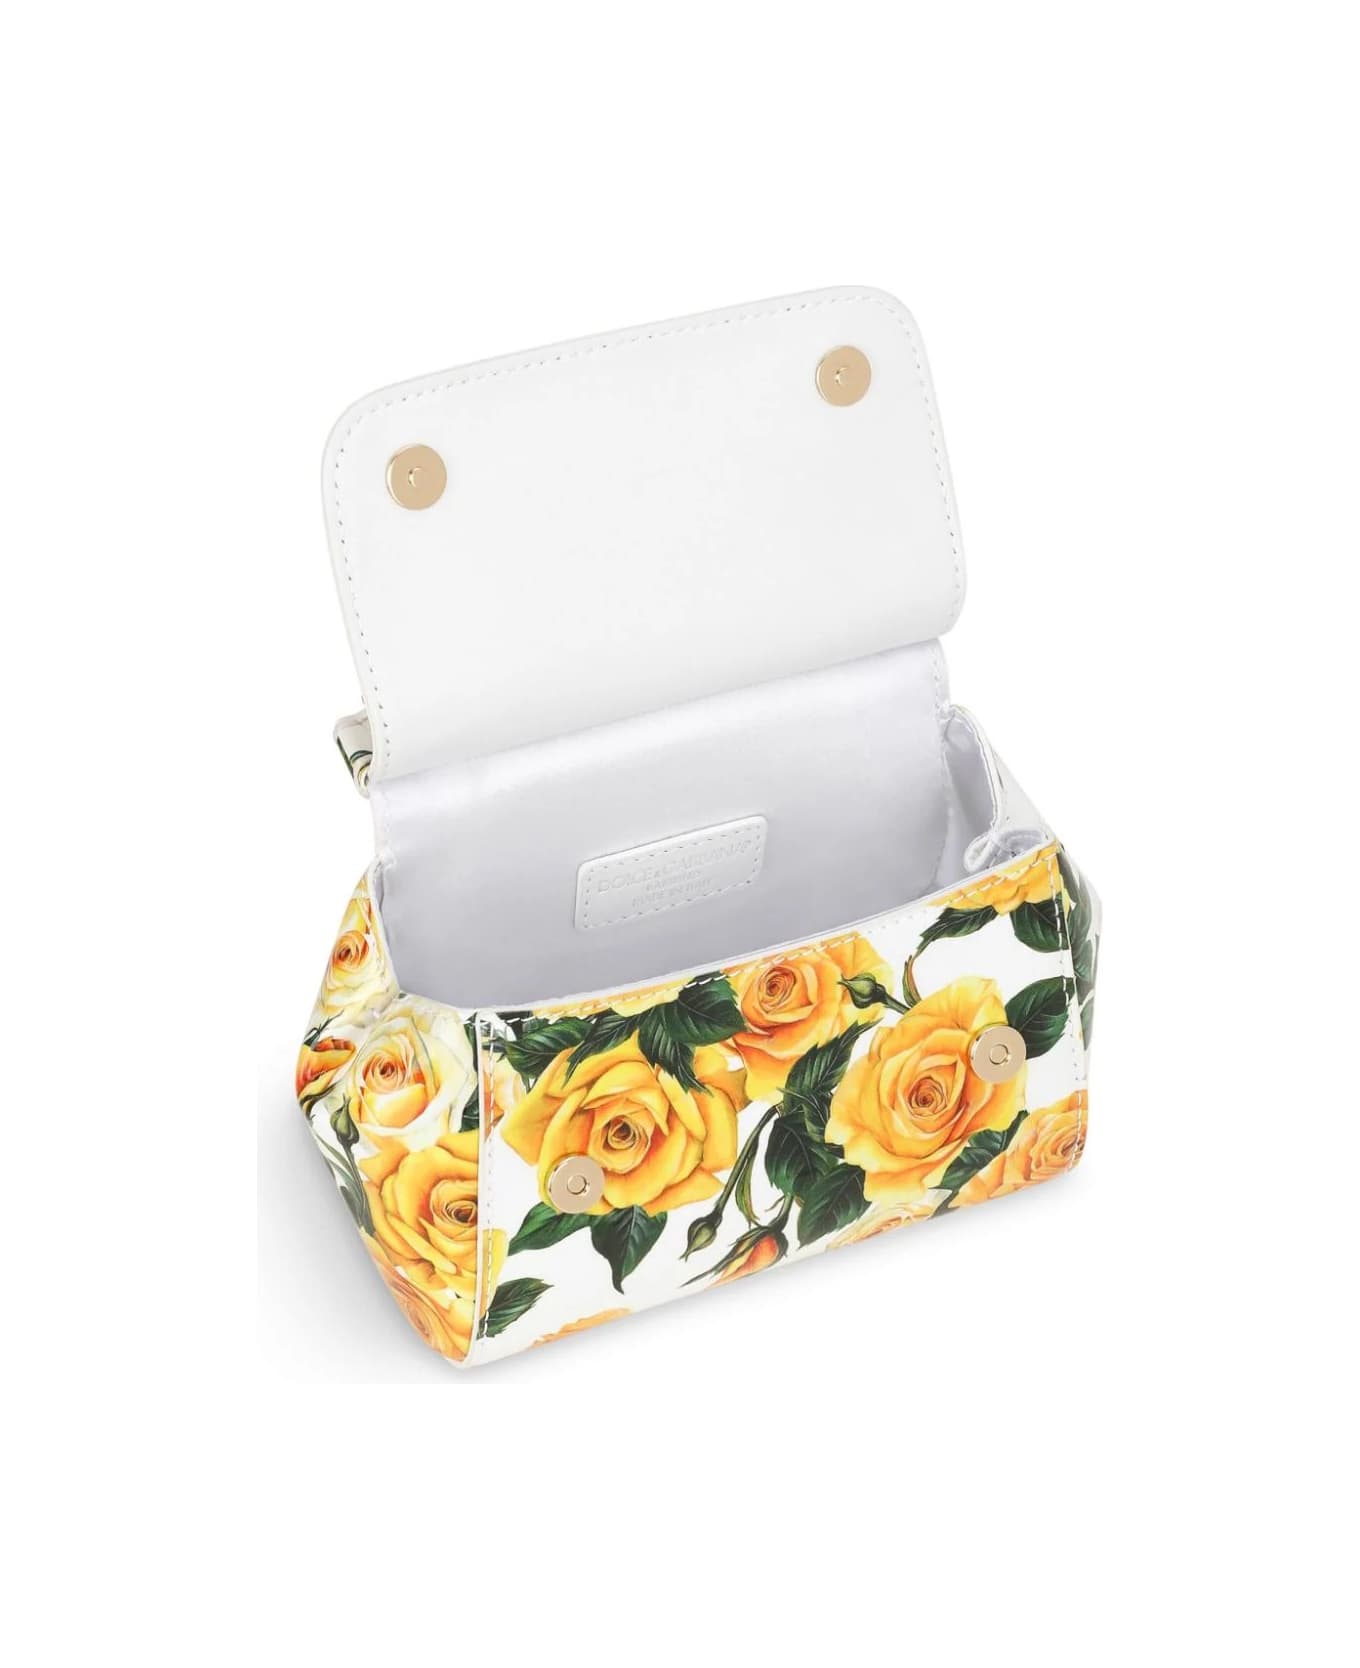 Dolce & Gabbana Sicily Mini Hand Bag With Yellow Rose Print - Yellow アクセサリー＆ギフト